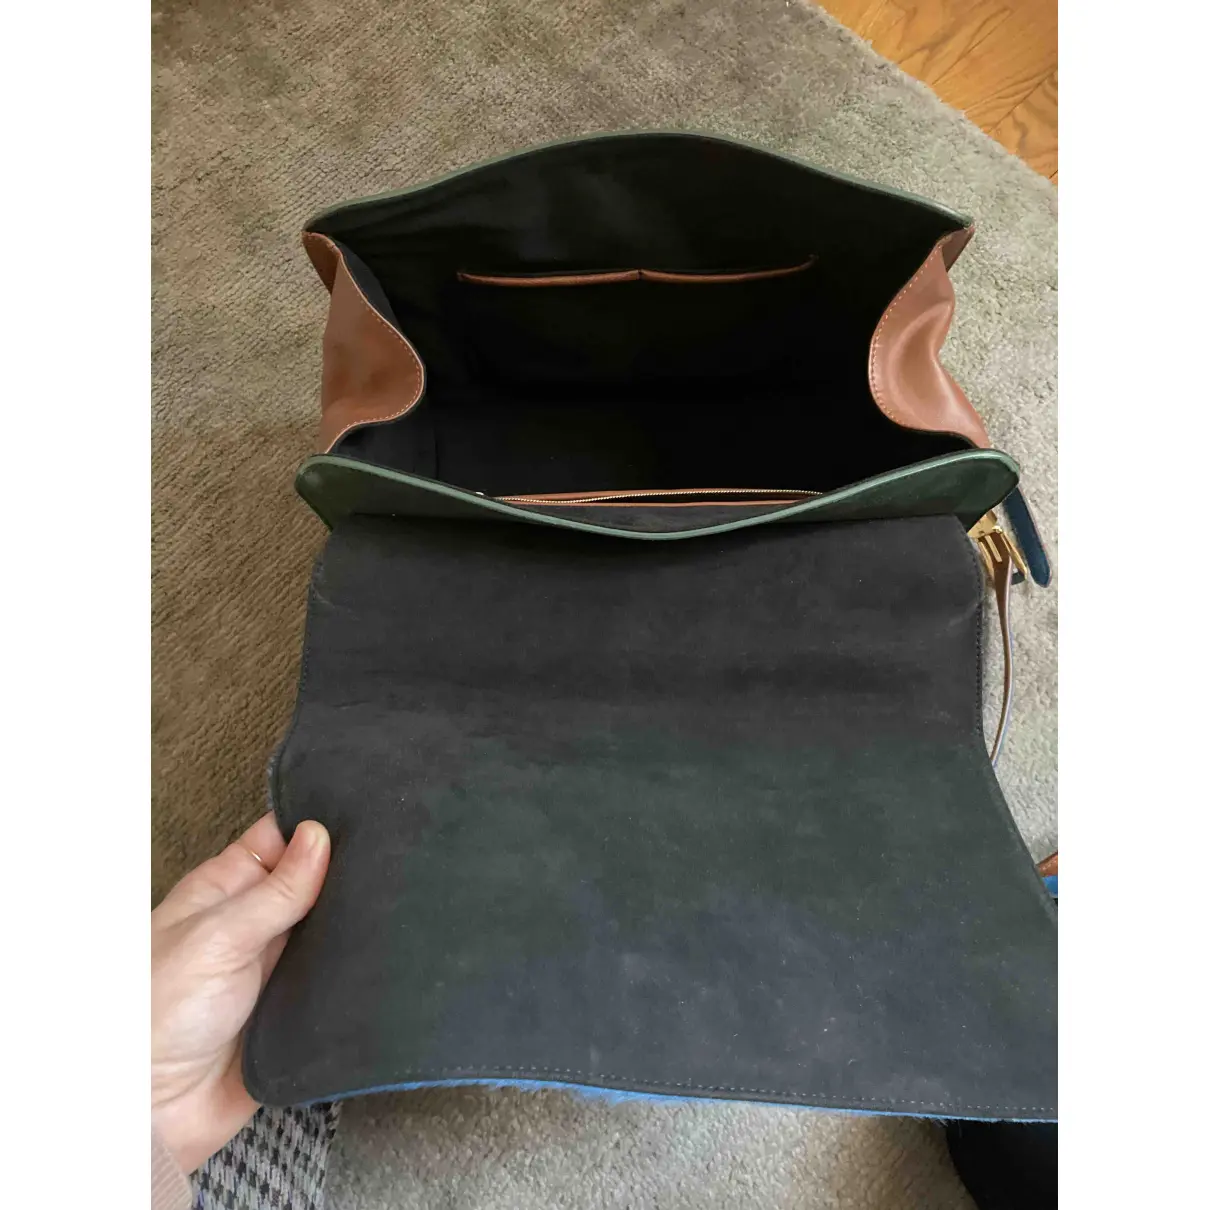 Buy Emilio Pucci Leather handbag online